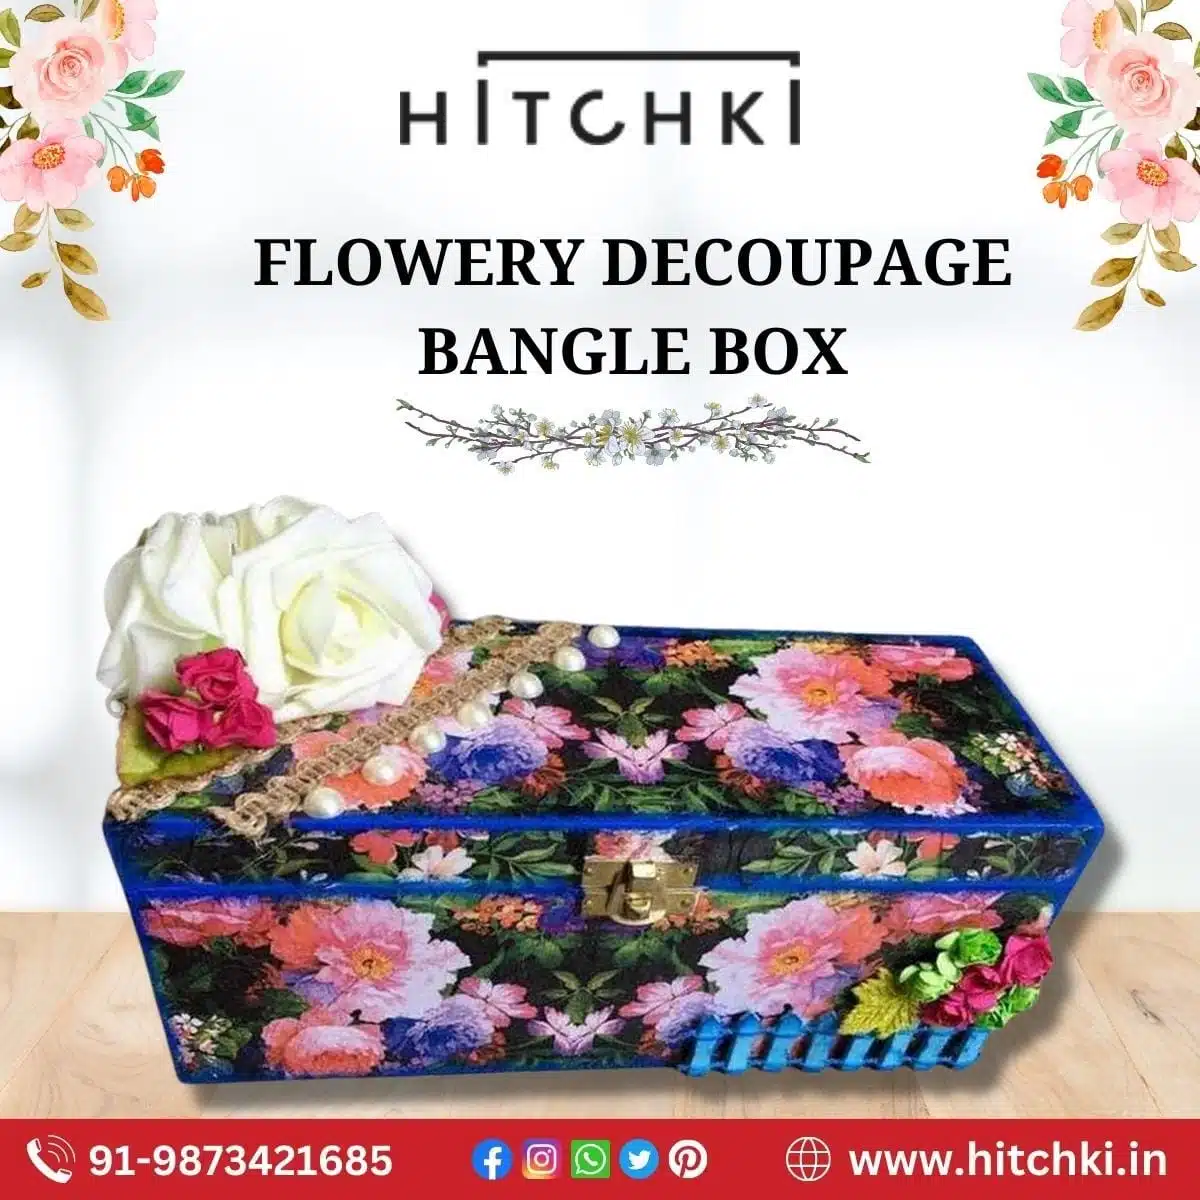 Trendy Flowery Decoupage Bangle Box From Hitchki